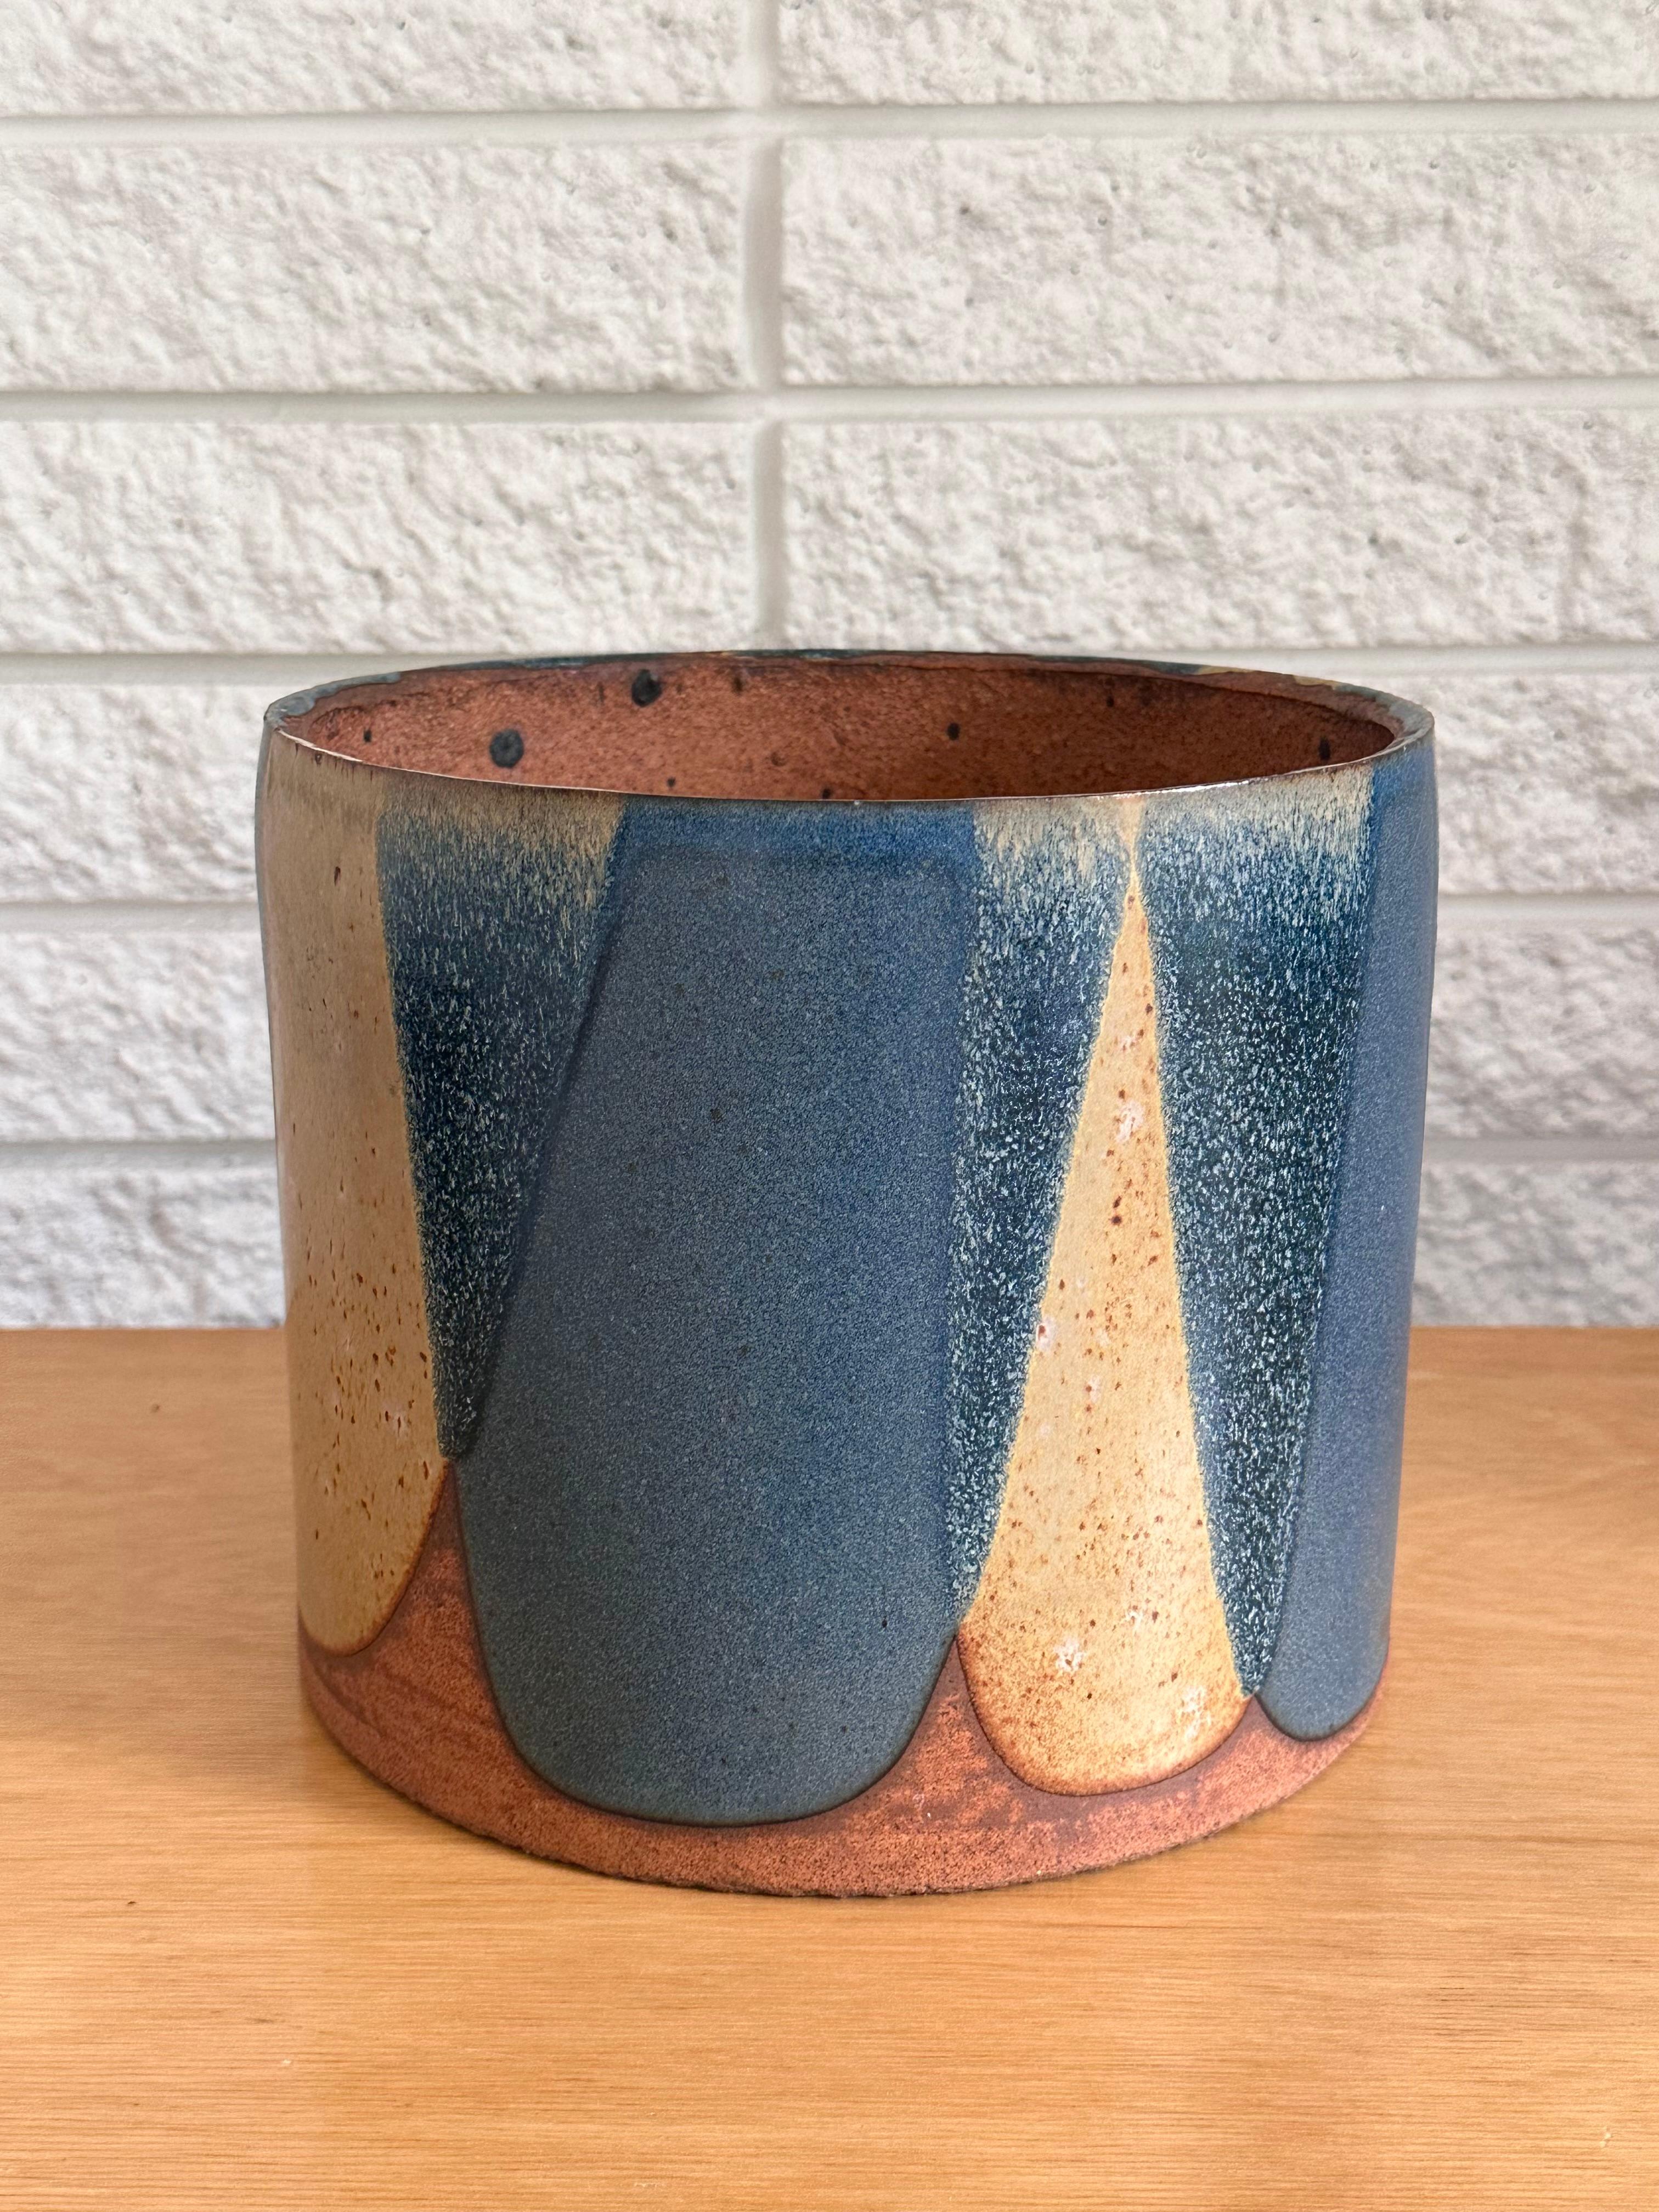 David Cressey Architectural Pottery Pro Artisan Flame Glaze Stoneware Planter 2